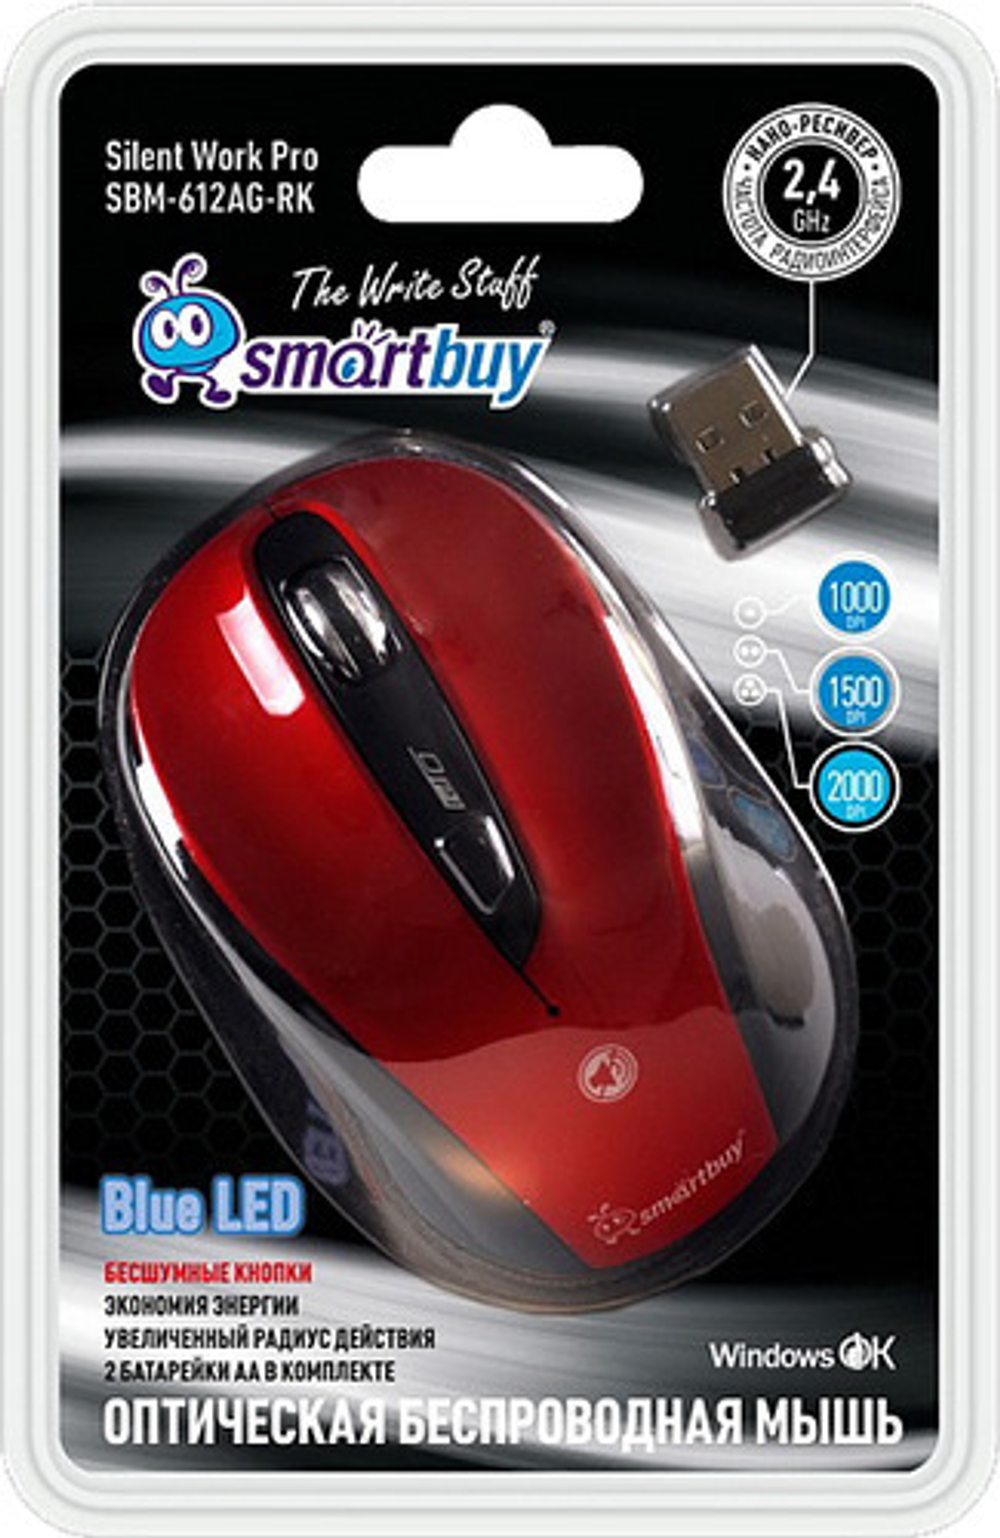 Беспроводная компактная мышь SmartBuy SBM-612AG-RK Red-Black USB, красный